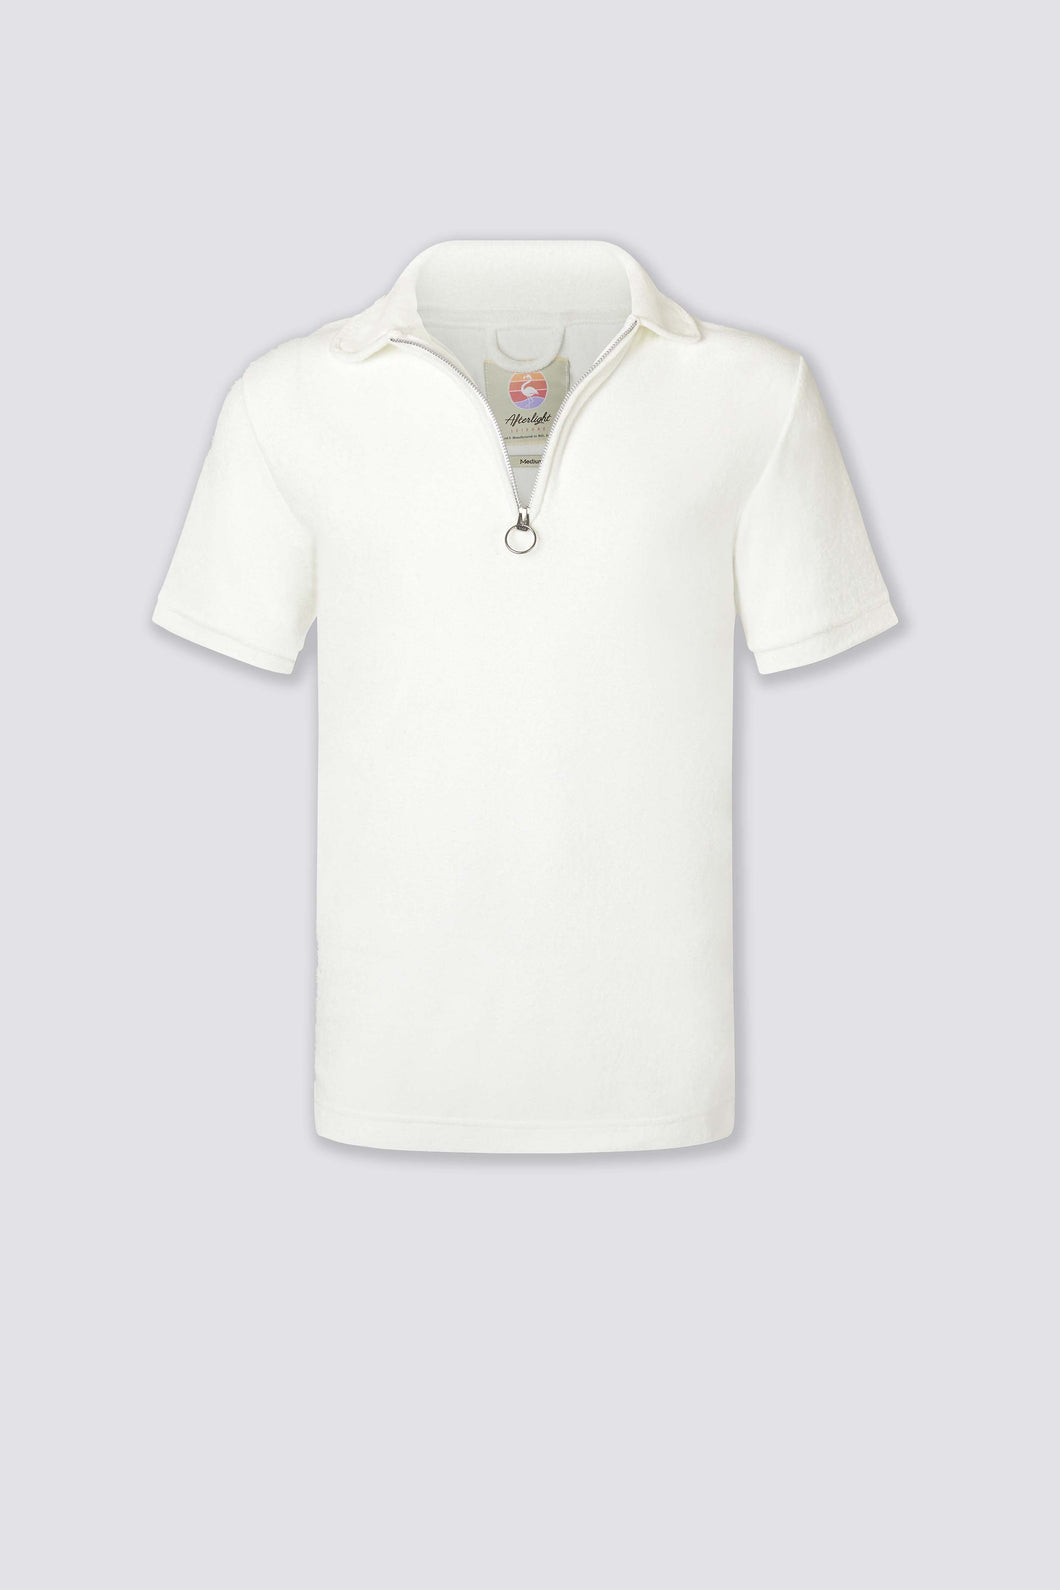 Terry Cloth Polo - Wimbledon White